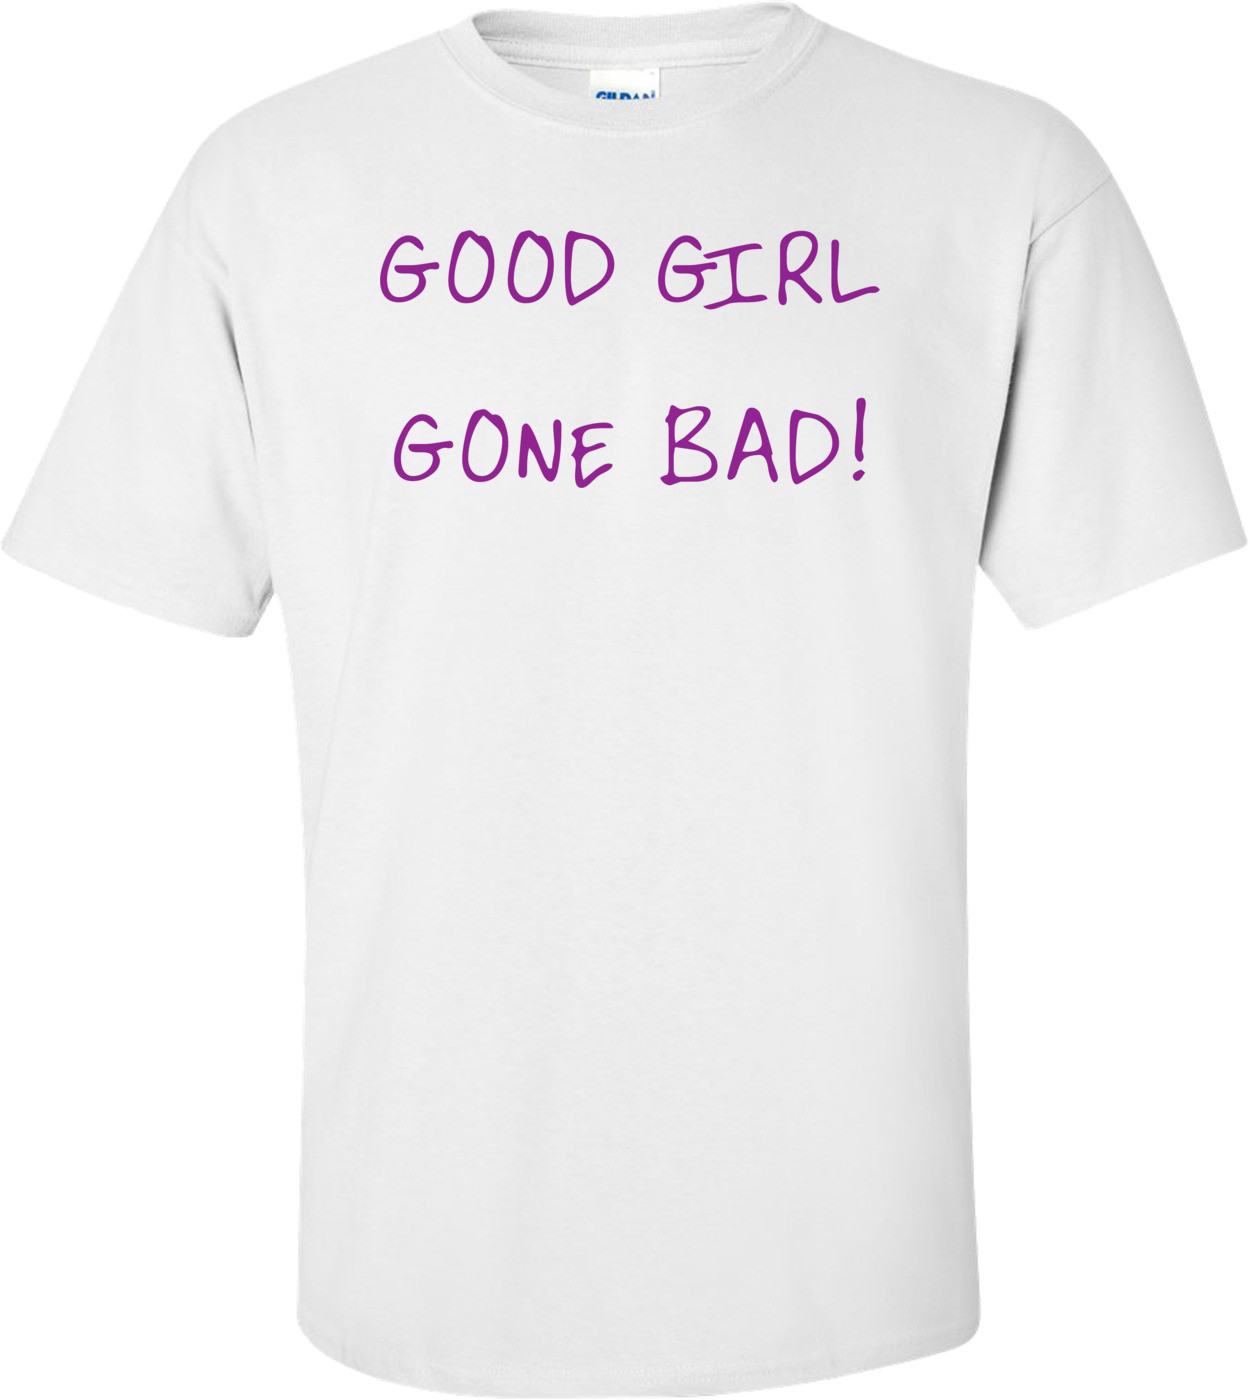 Good Girl Gone Bad! Shirt